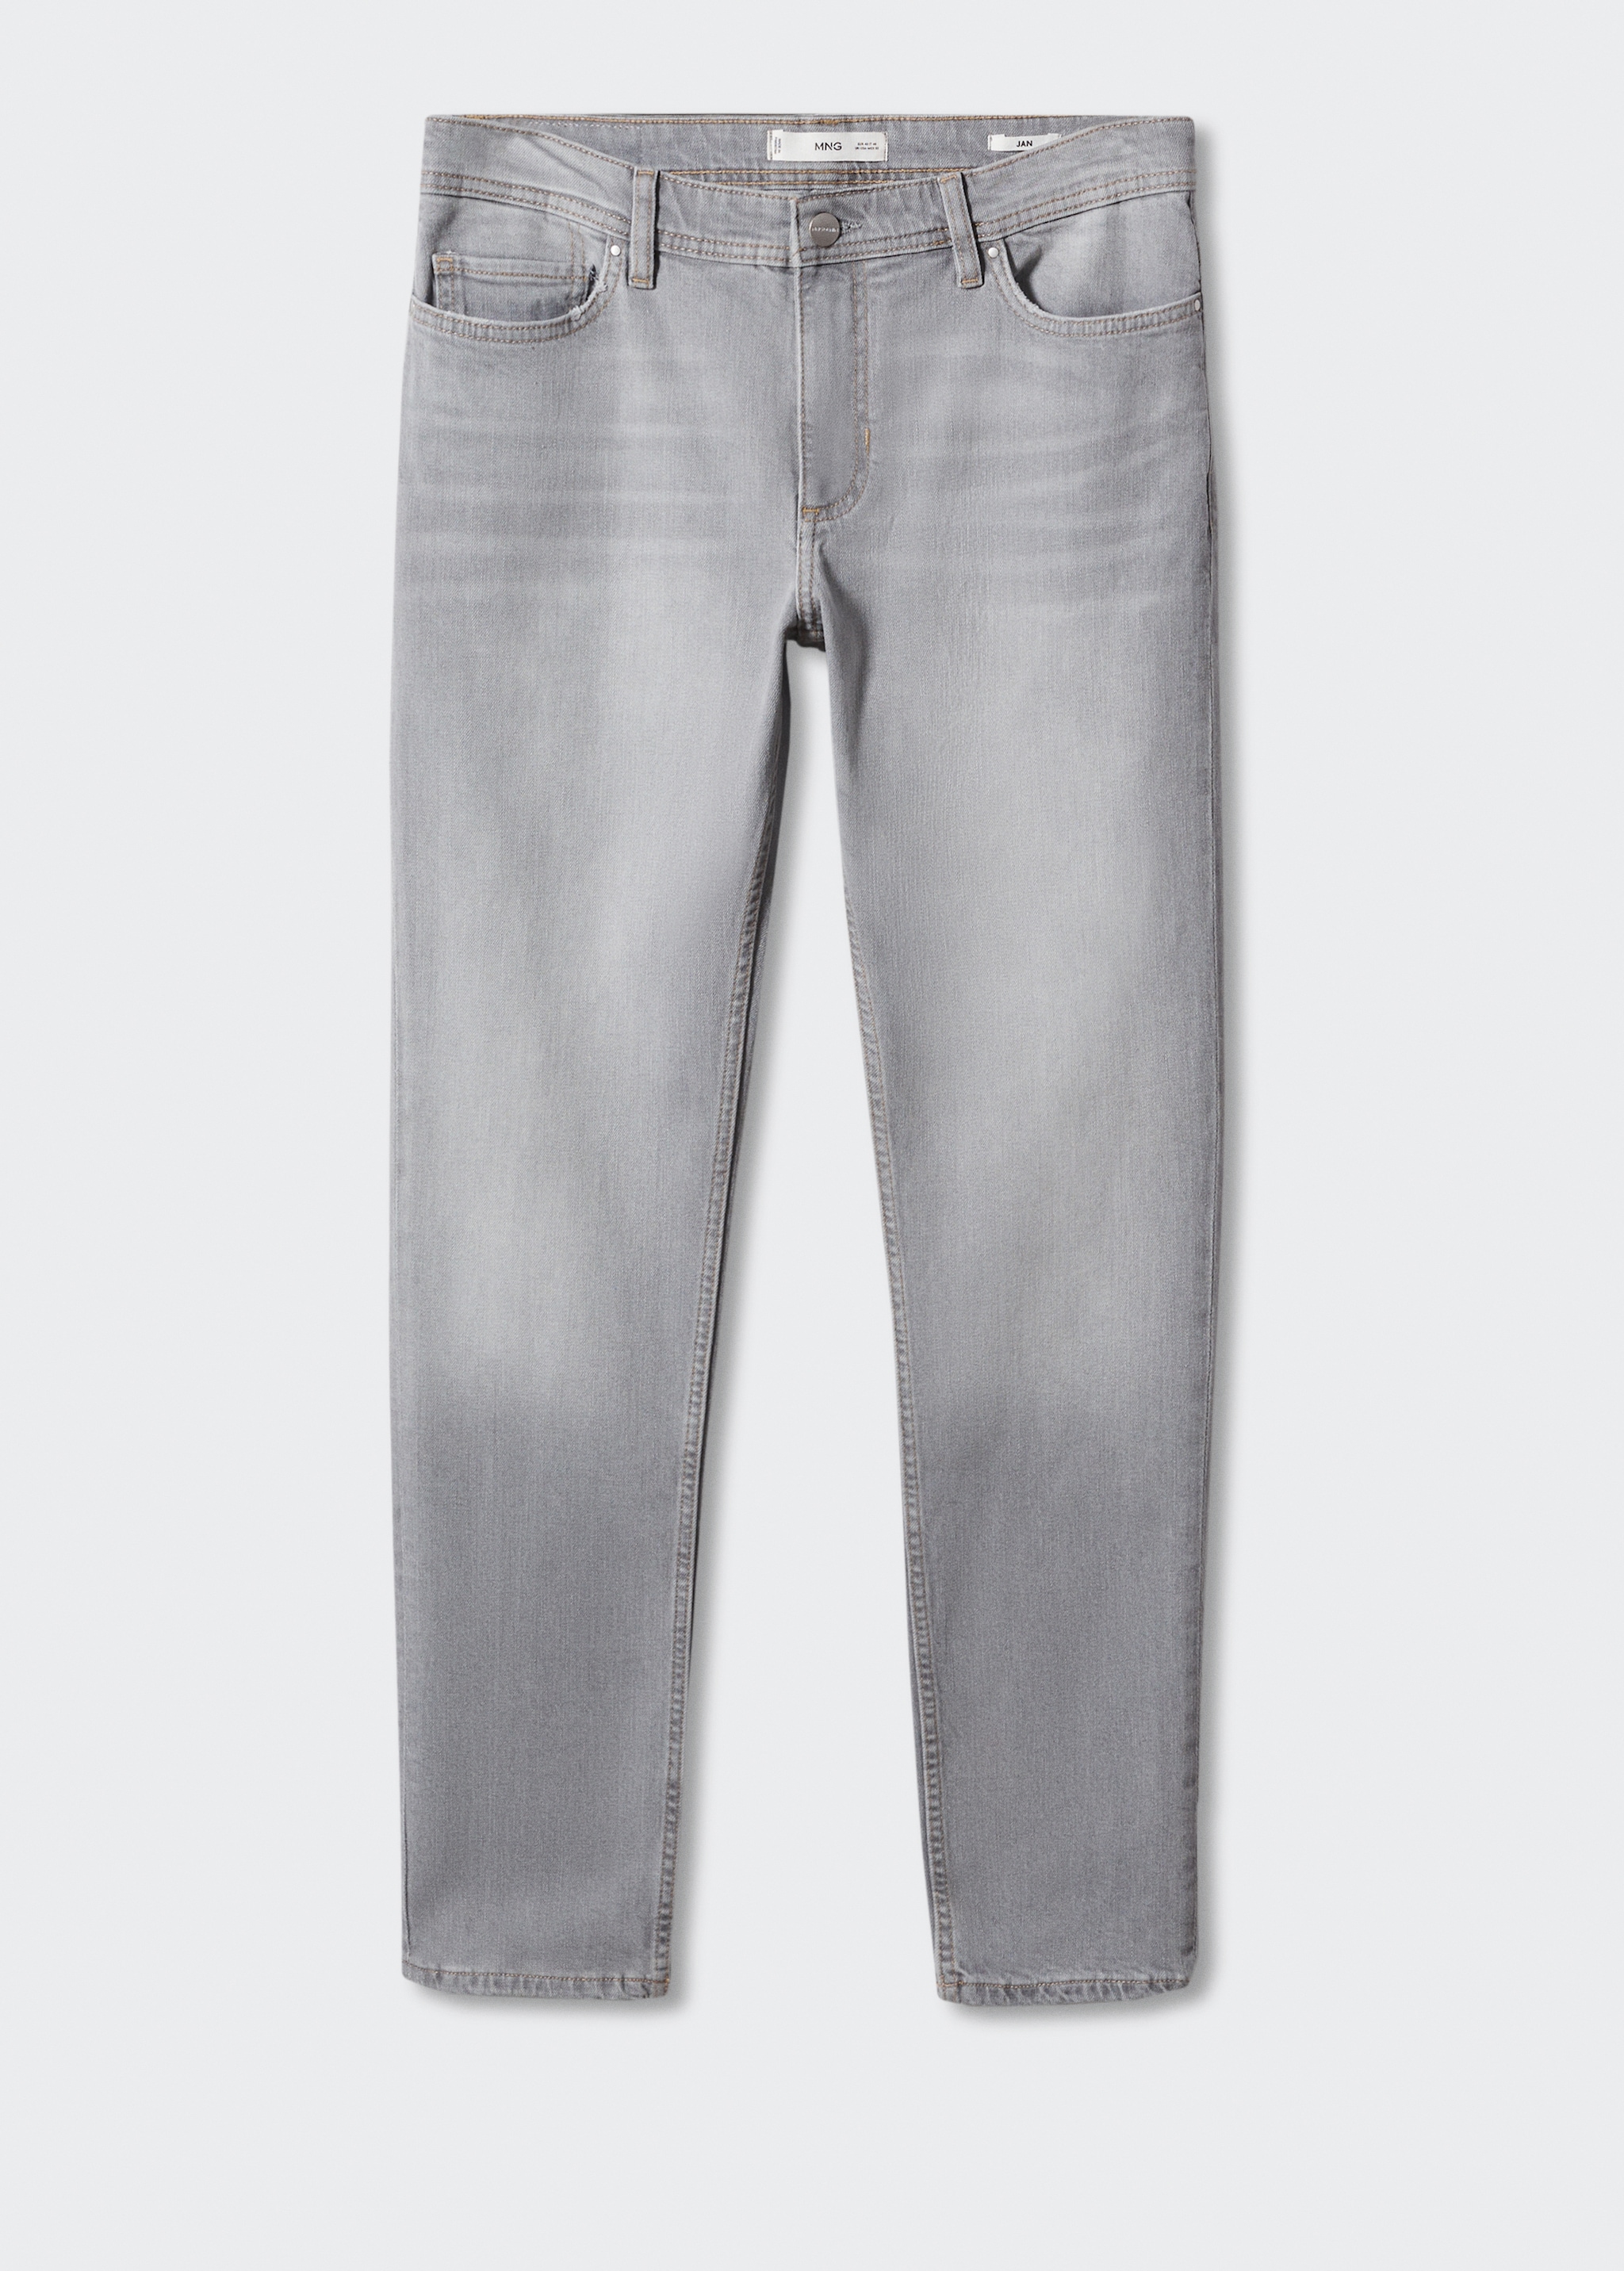 Jeans Jan slim fit  - Artículo sin modelo